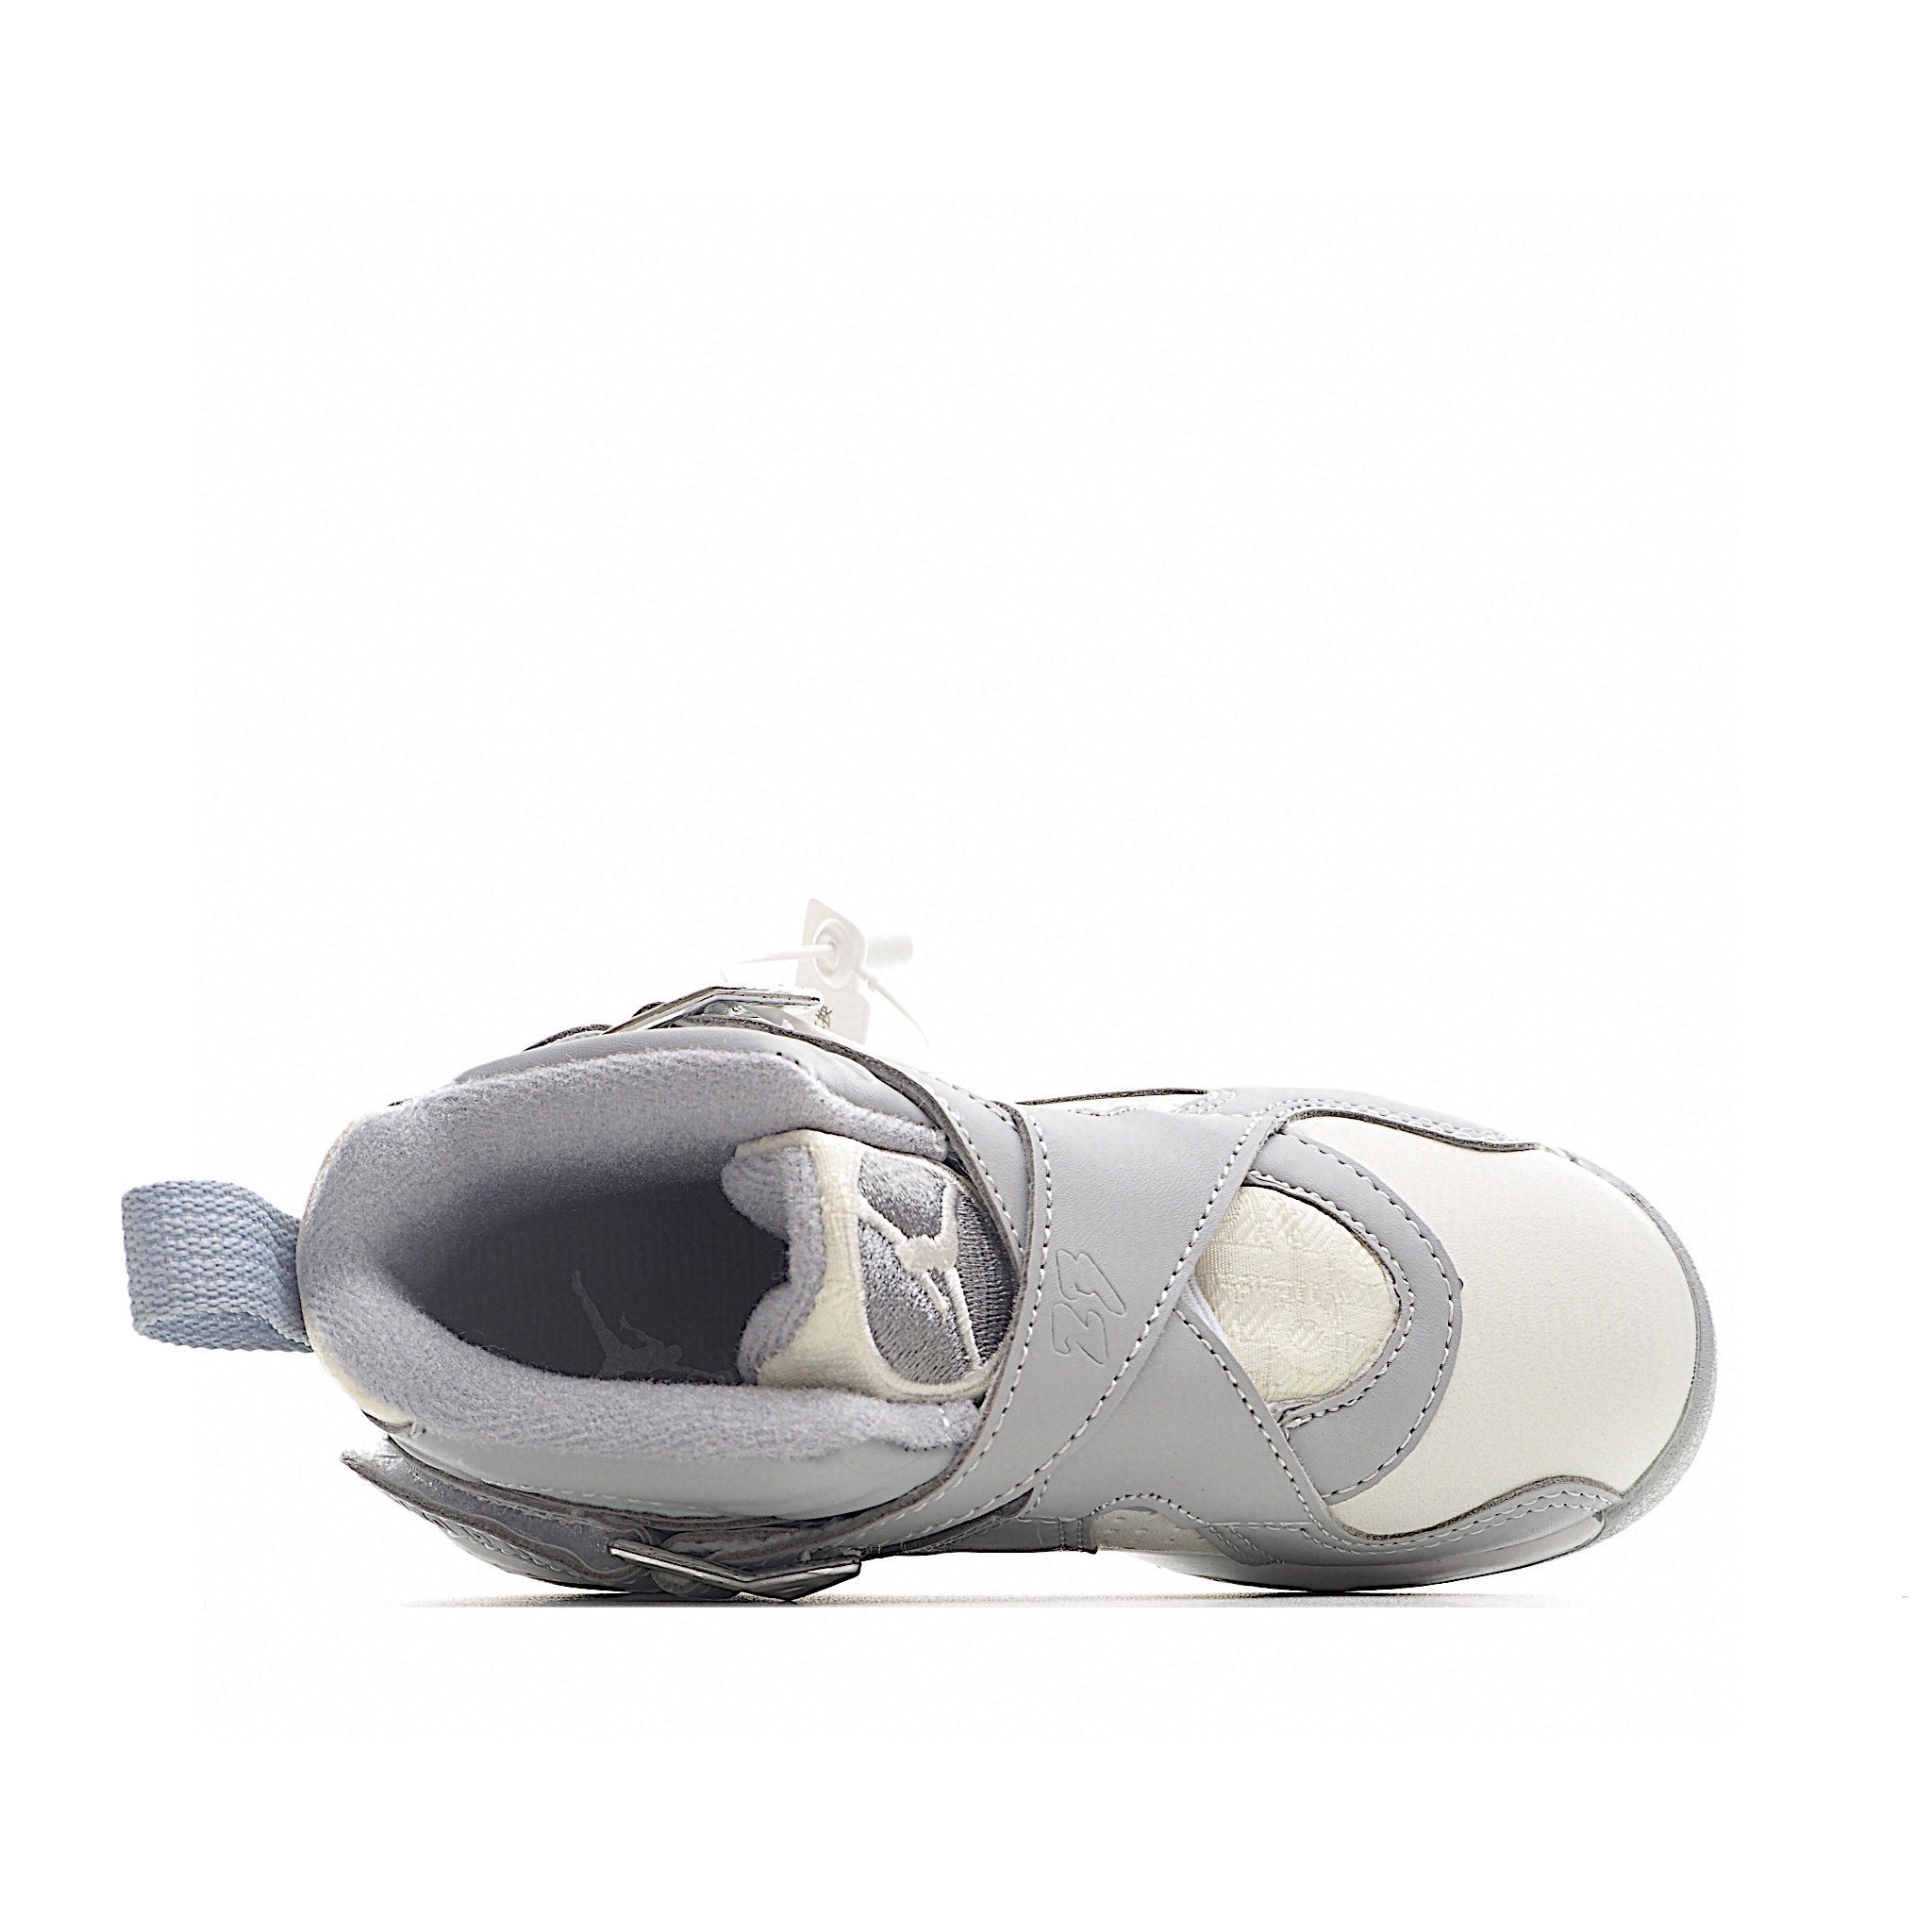 Nike air jordan 8 retro grey shoes